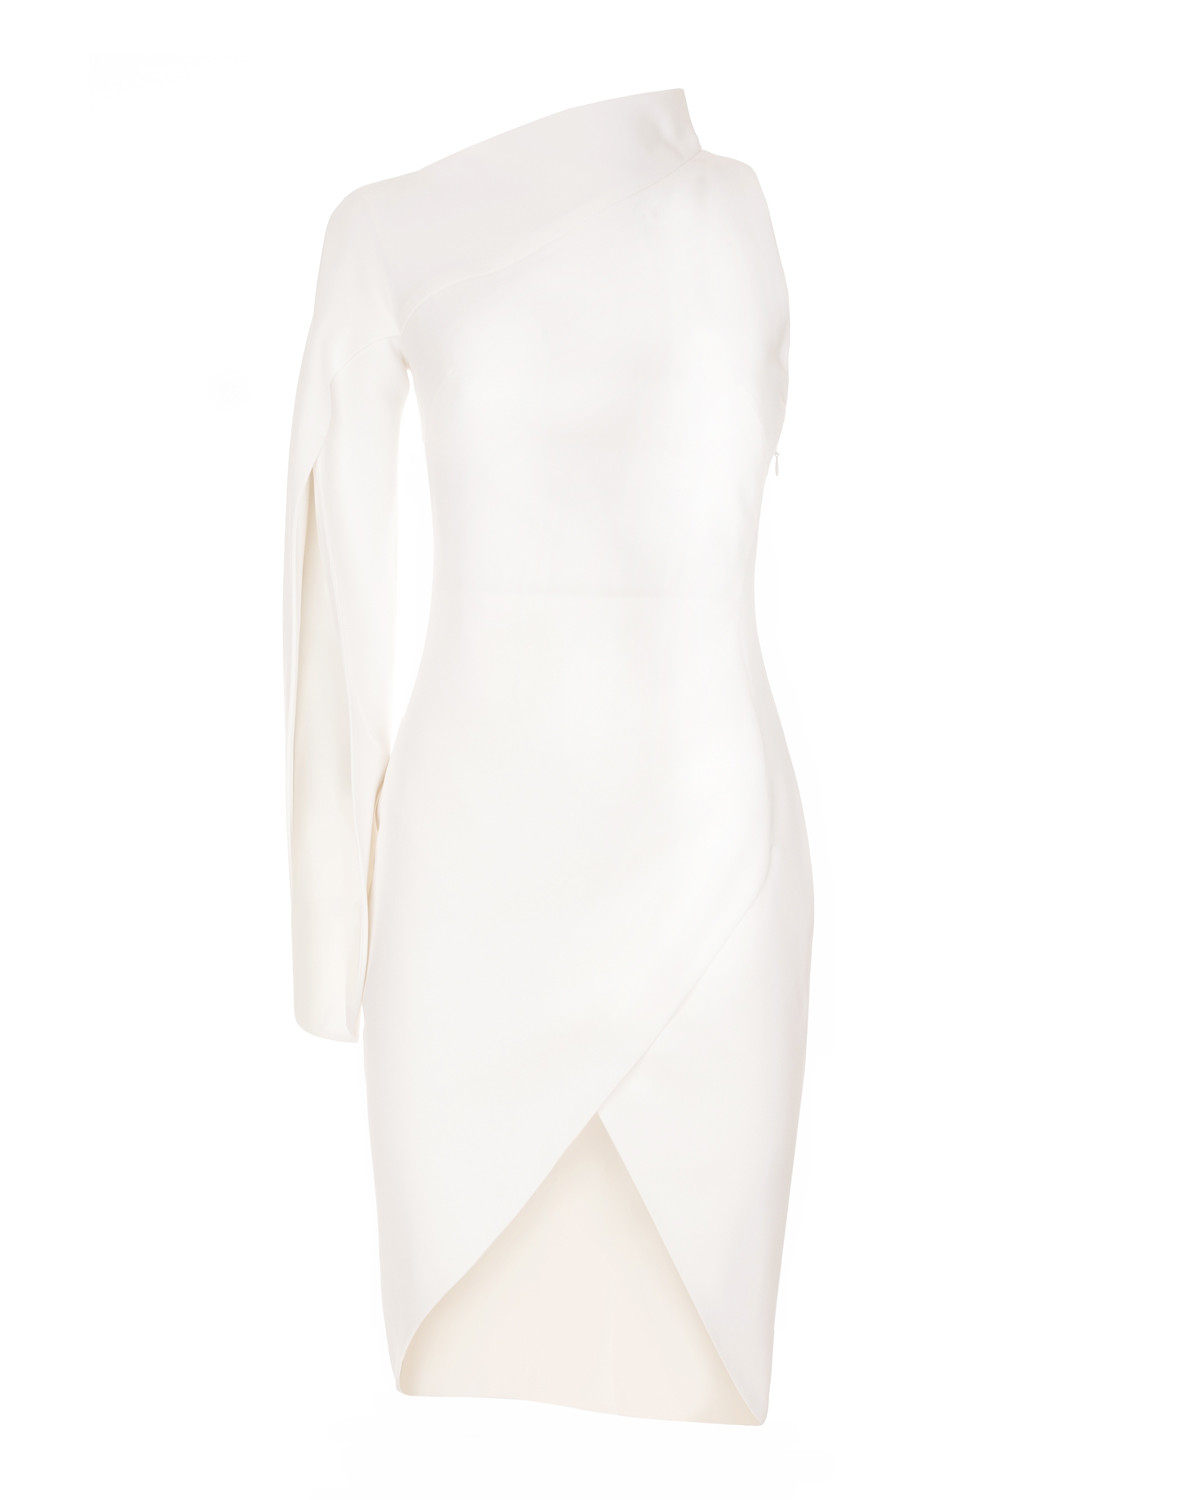 White assymetric cocktail dress